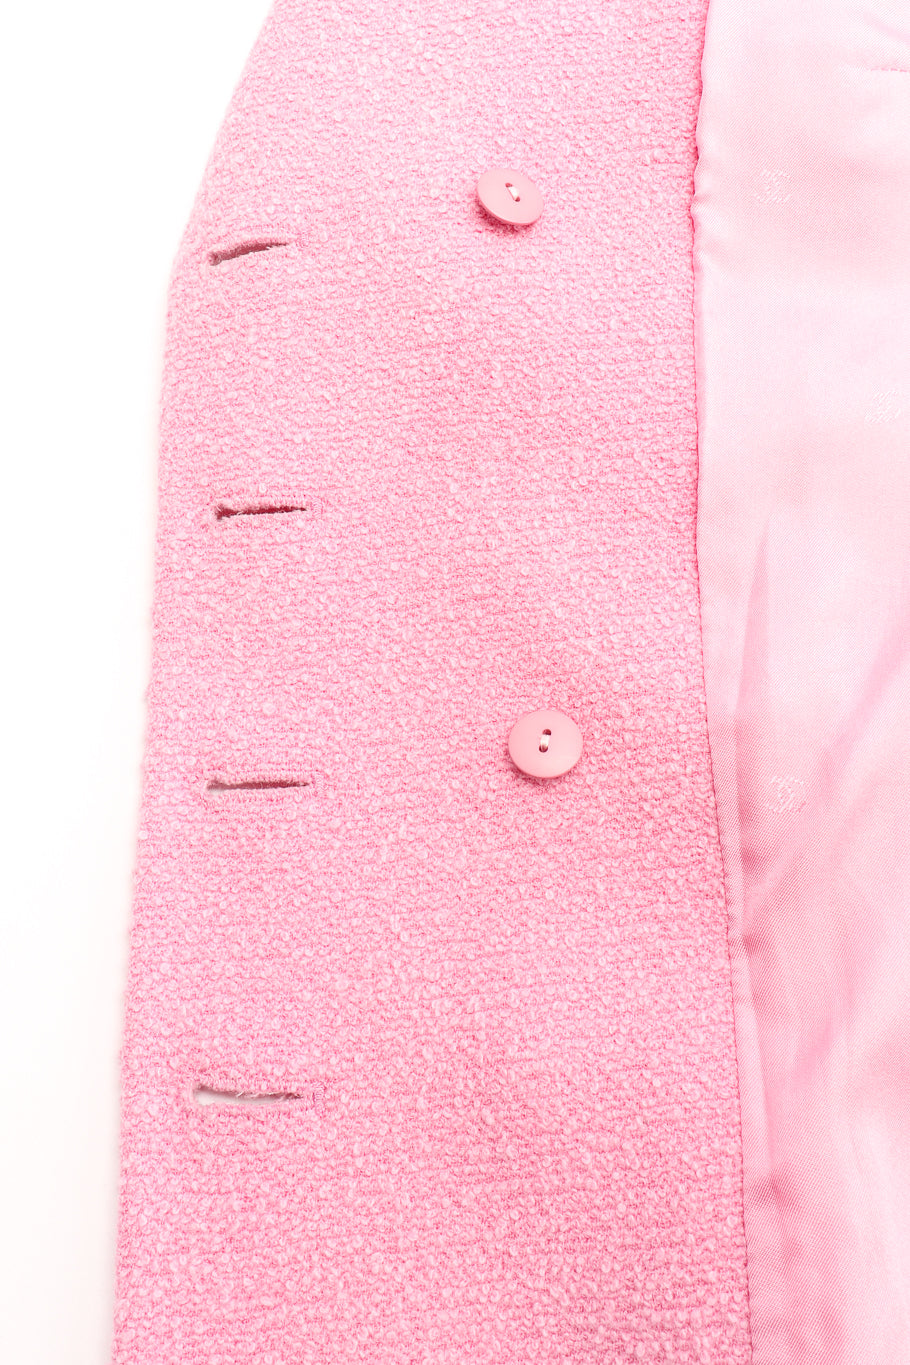 Bouclé knit longline jacket by Chanel inside buttons @recessla